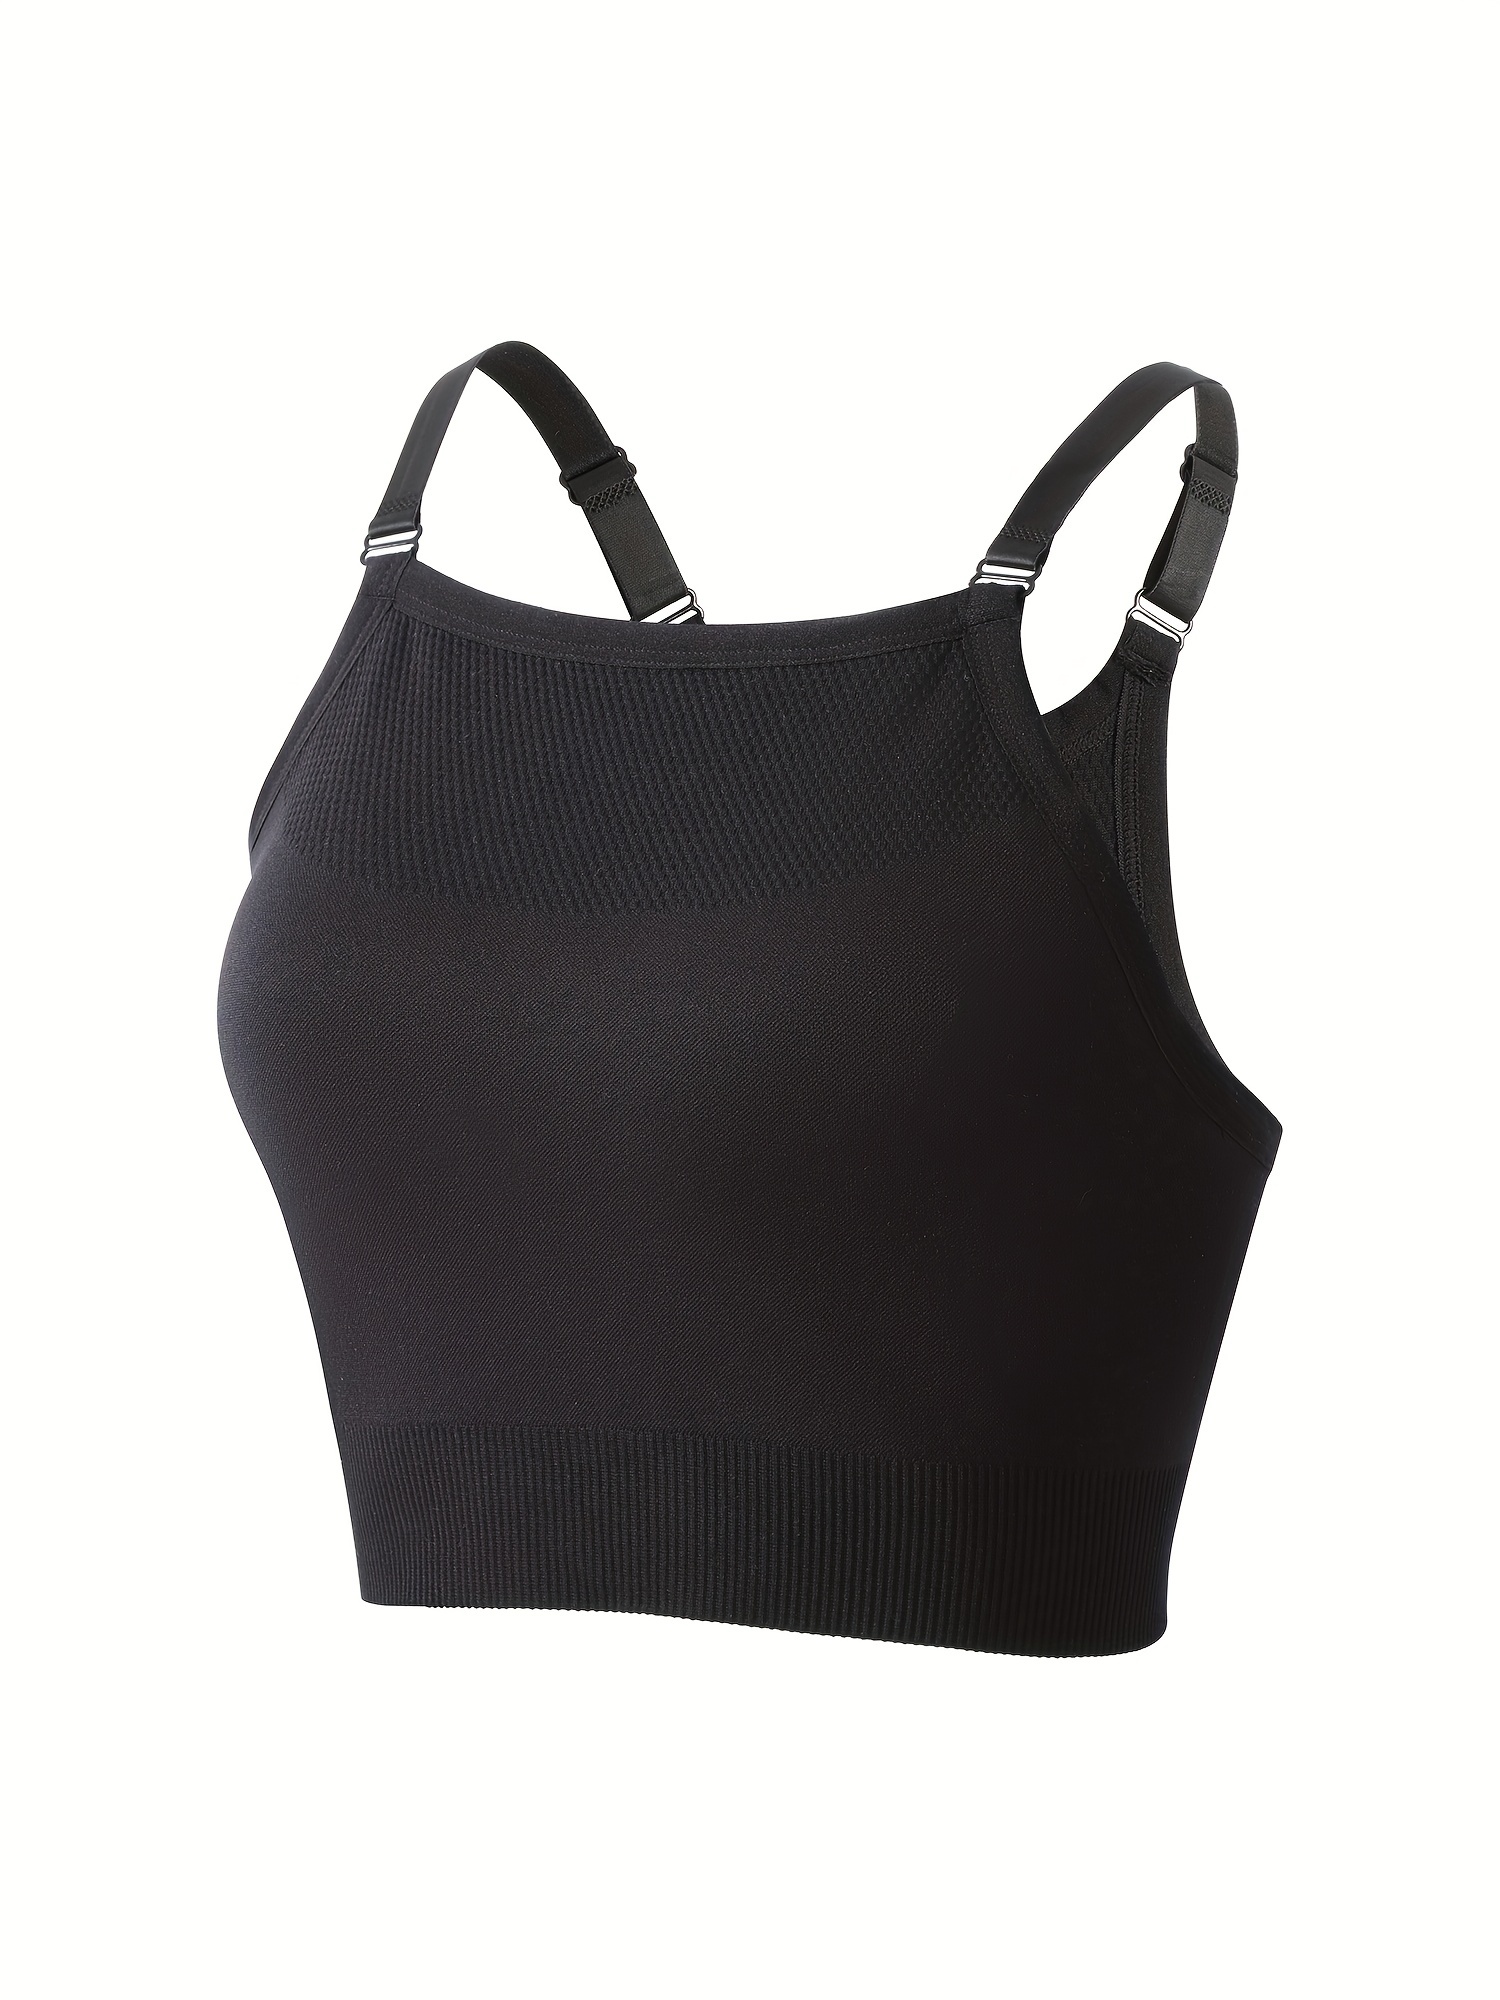 TOBWIZU Plus Size Sports Bra For Women Racerback Seamless Padded Yoga Gym  Bra Workout Multipack Activewear Bra